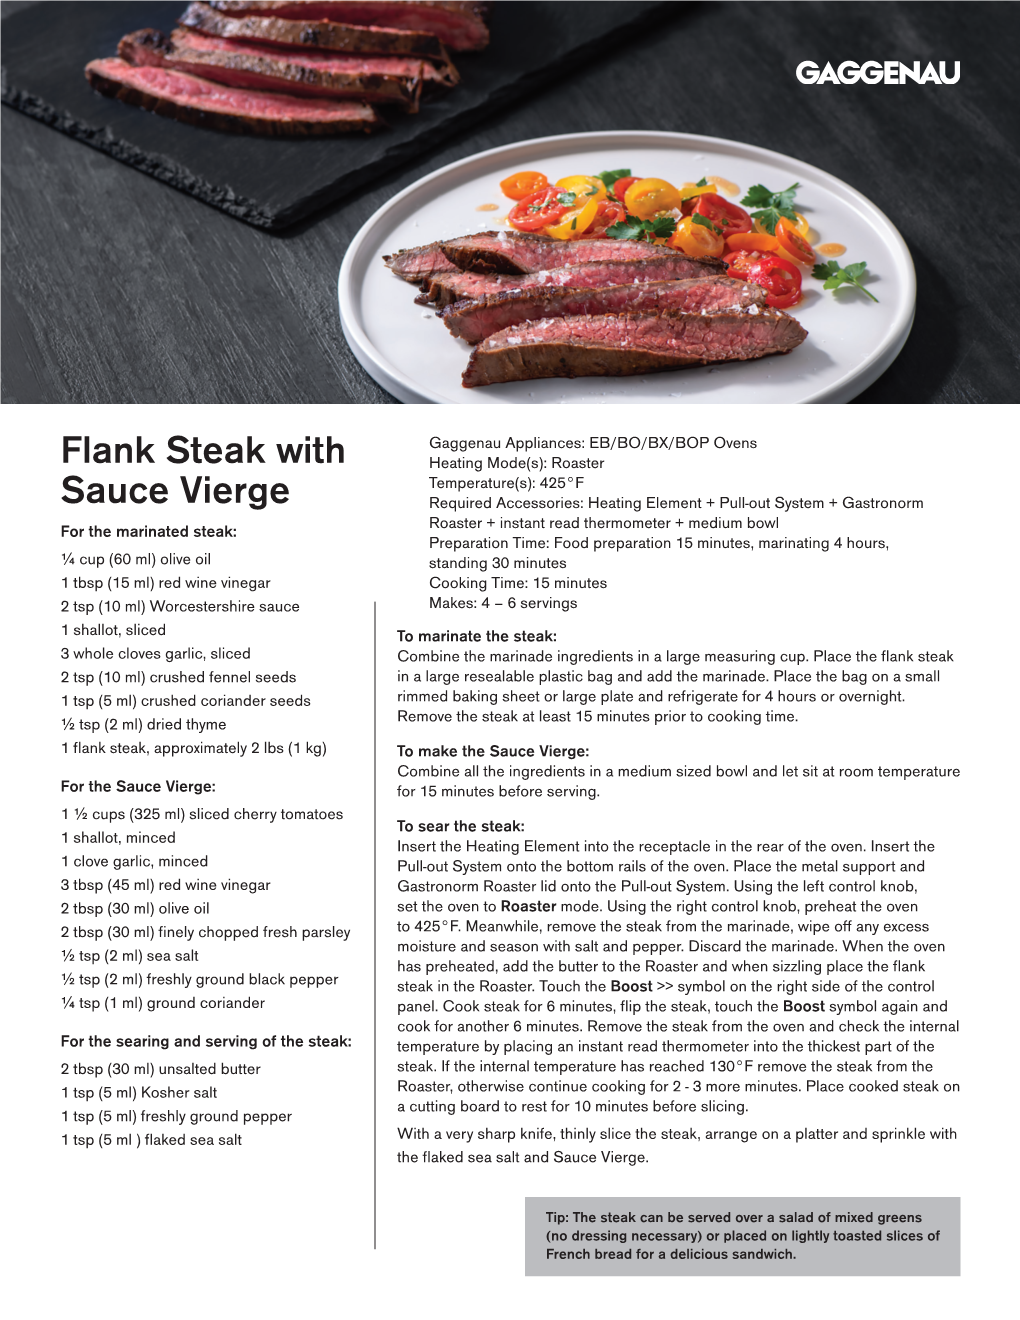 Flank Steak with Sauce Vierge